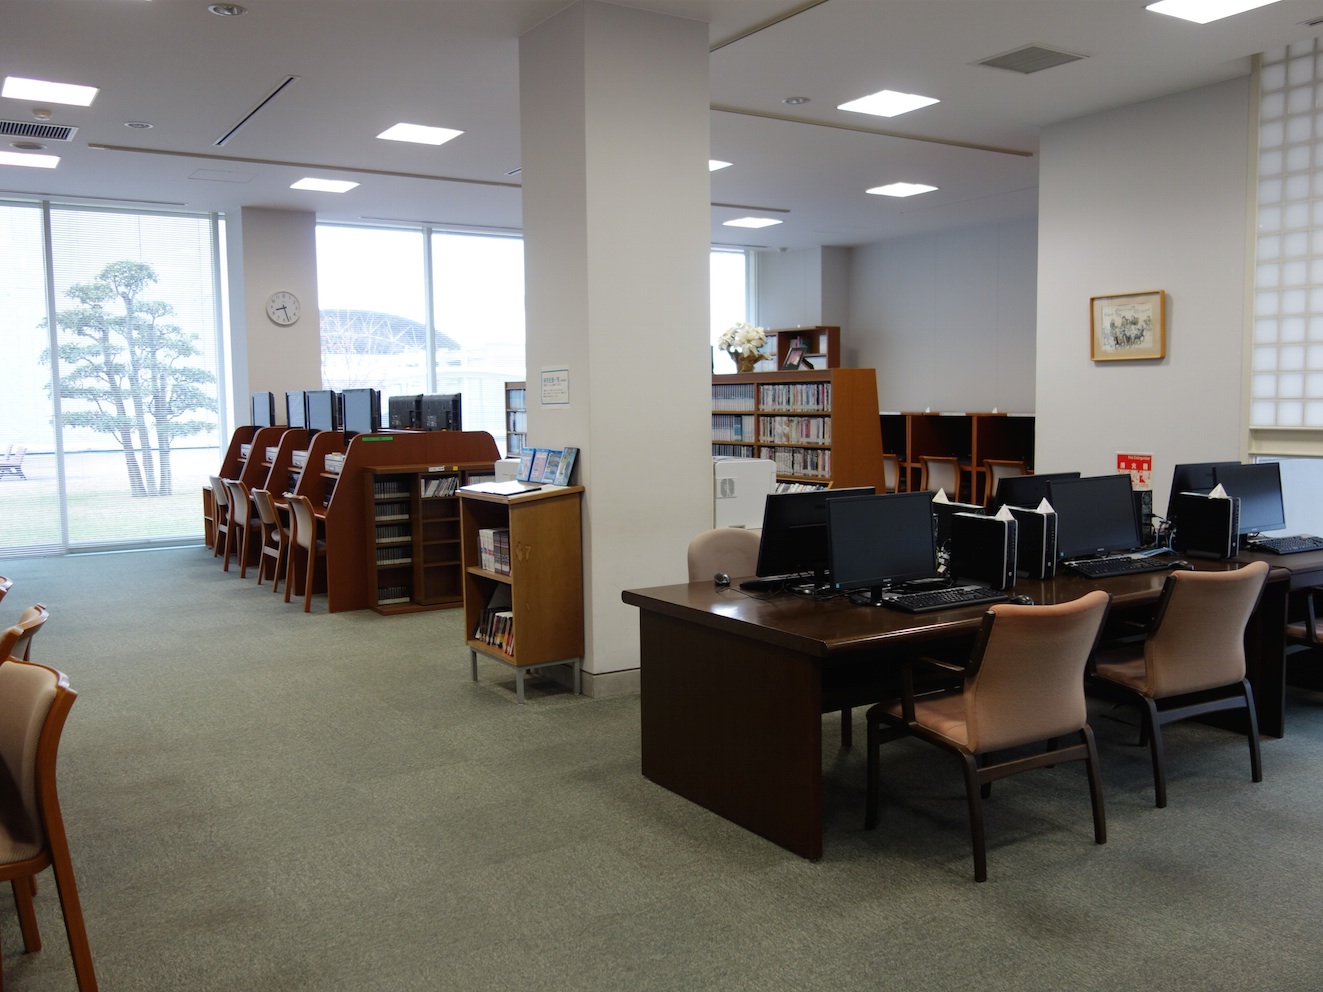 長崎県立大学の図書館